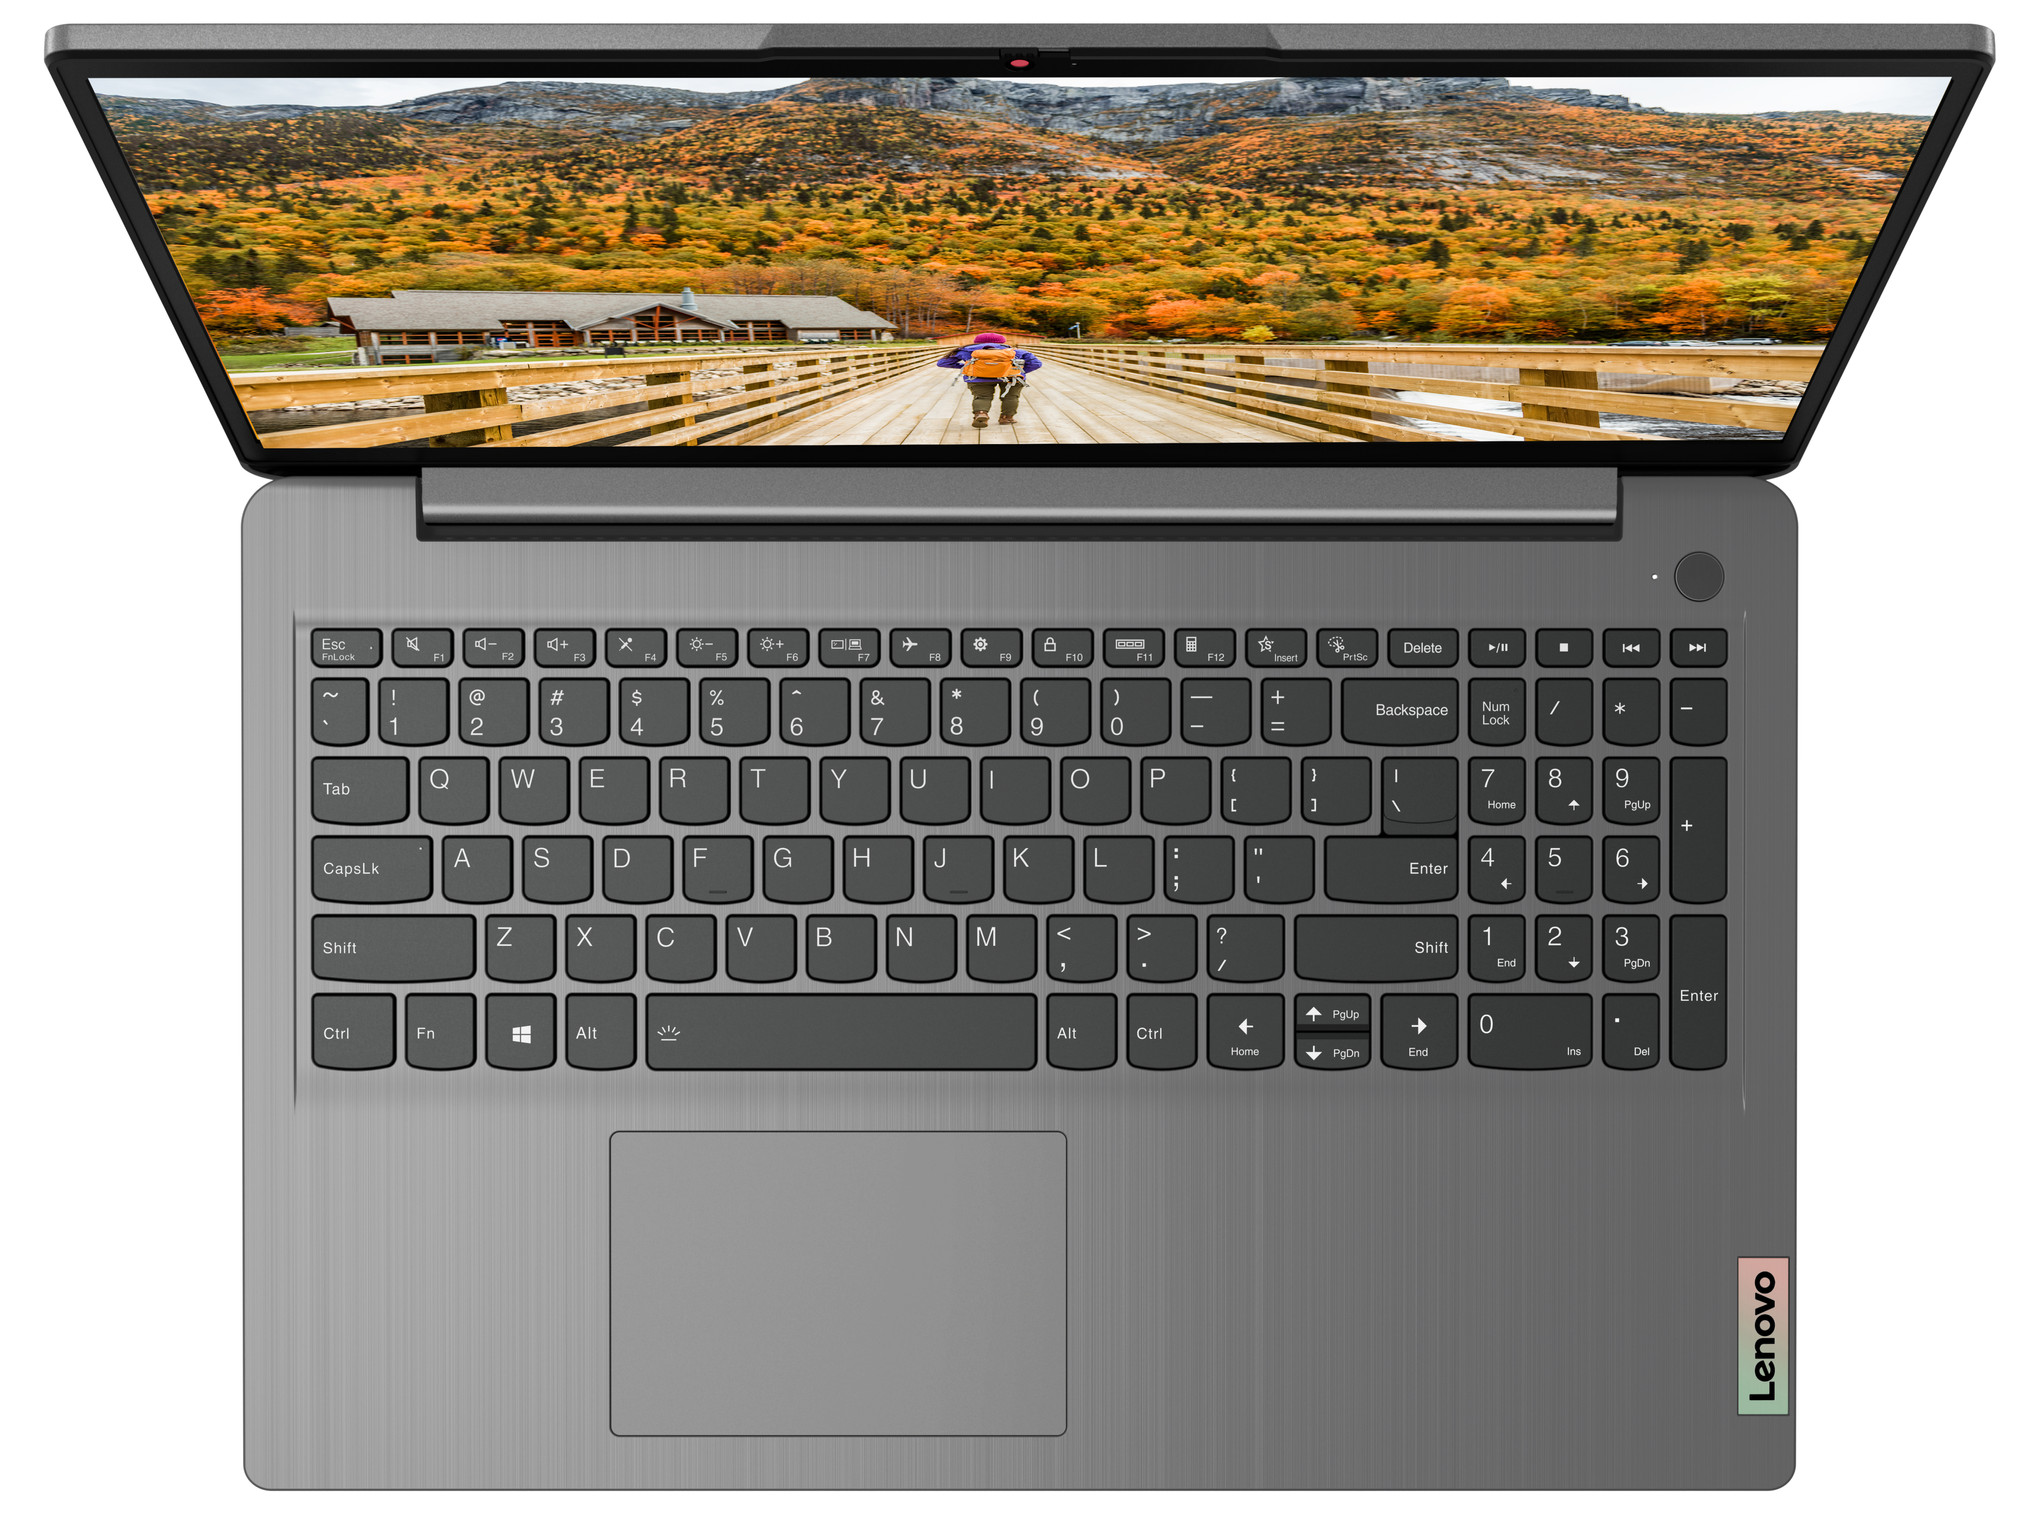 [Mới 100% Full Box] Laptop Lenovo Ideapad 3 15ALC6 82KU0113FQ - AMD Ryzen 5